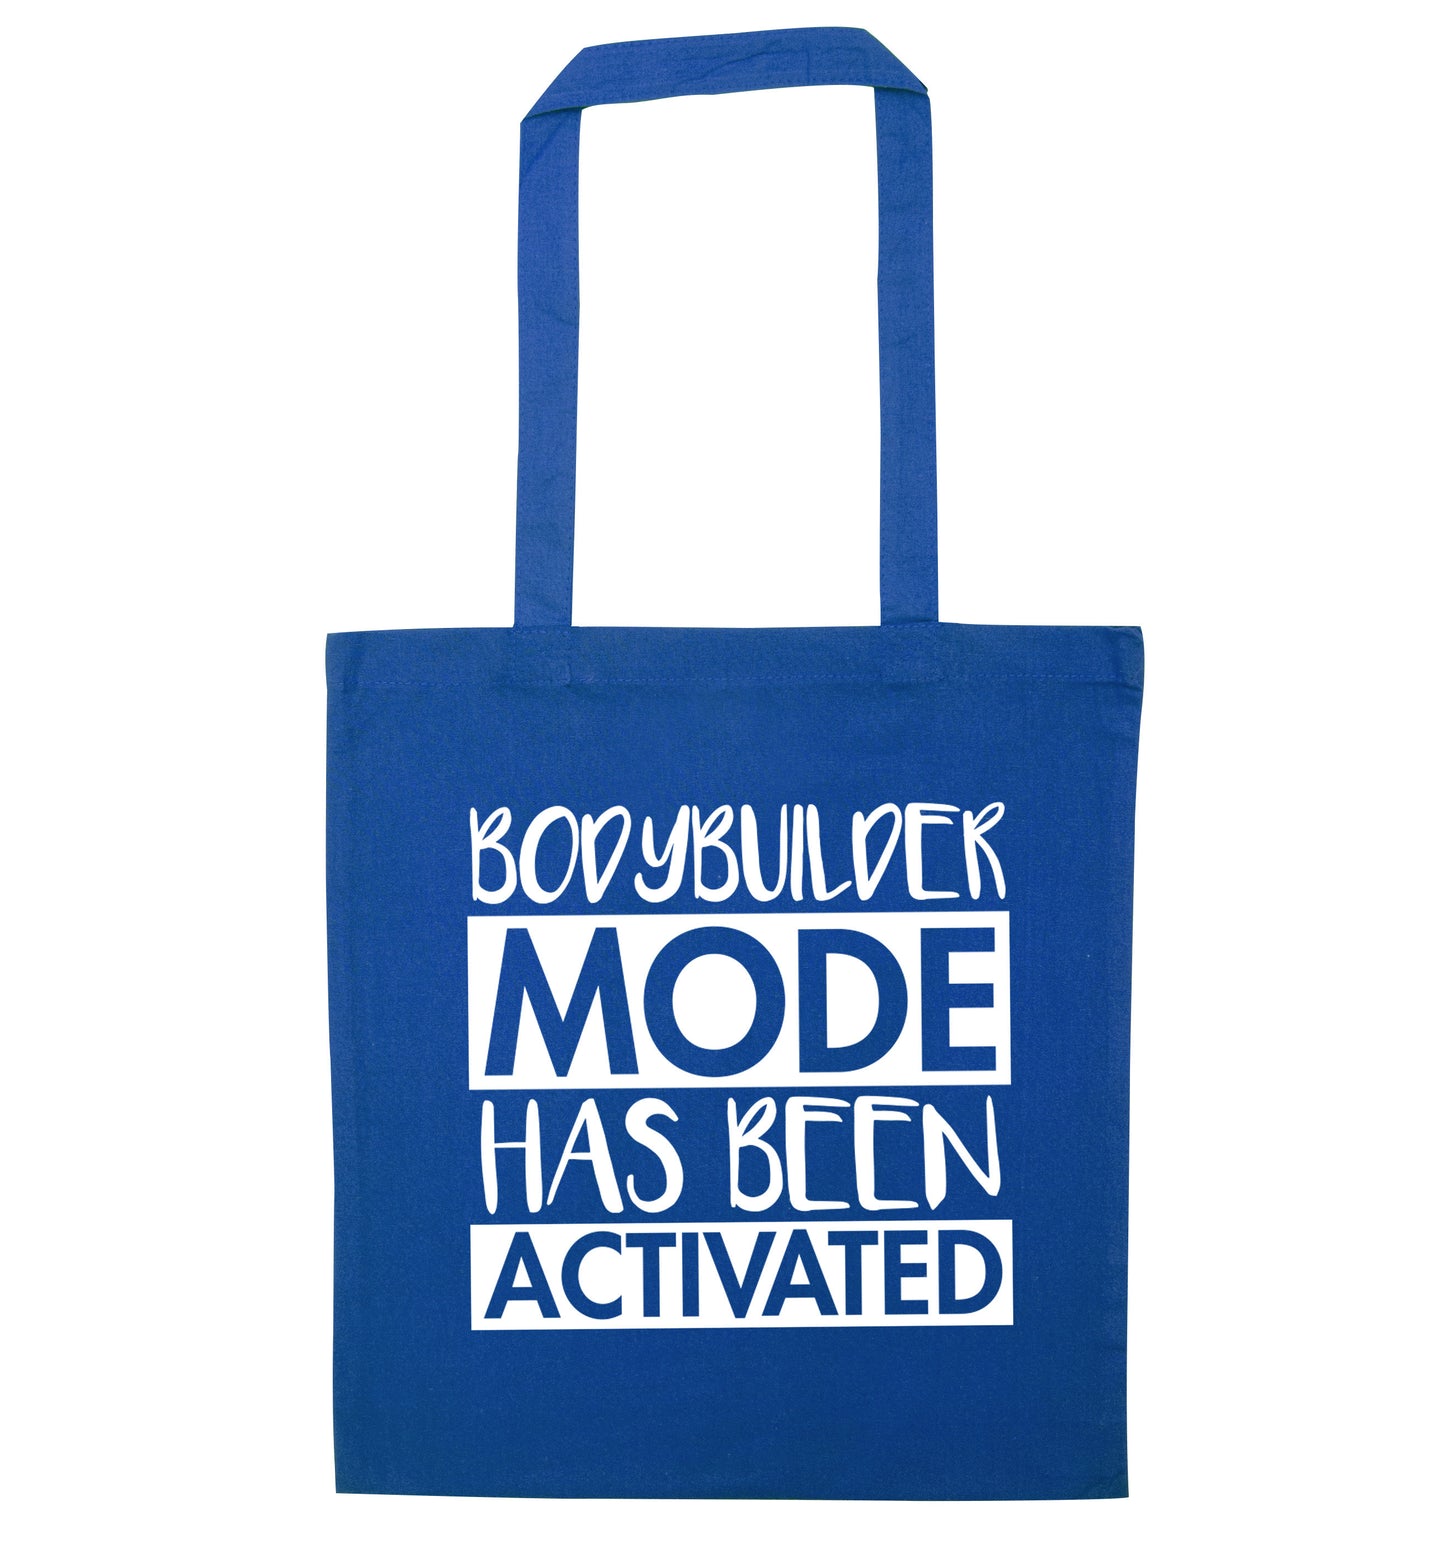 Bodybuilder mode activated blue tote bag